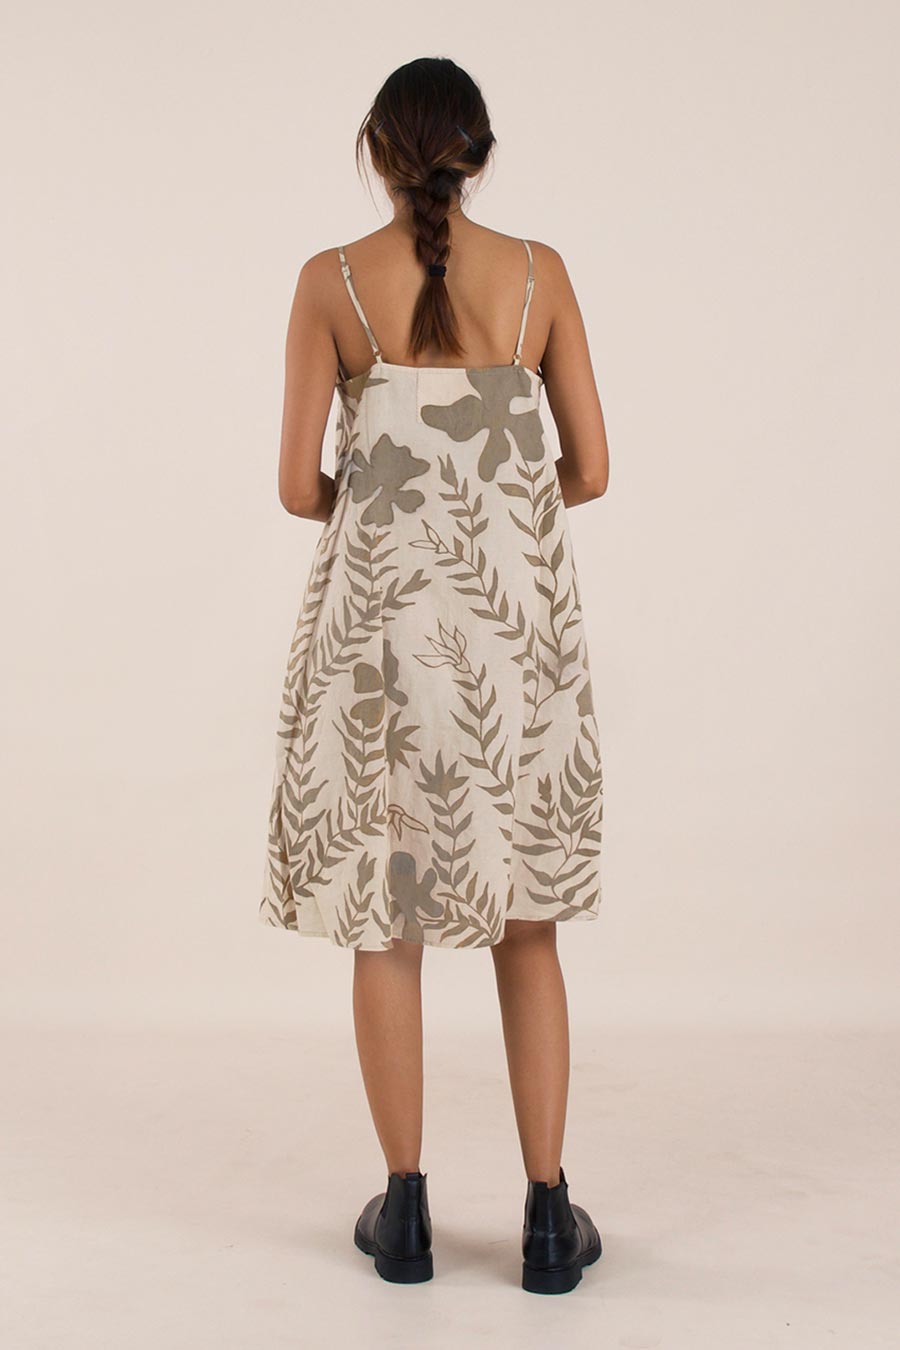 Beige Hand-Painted Cotton Dress